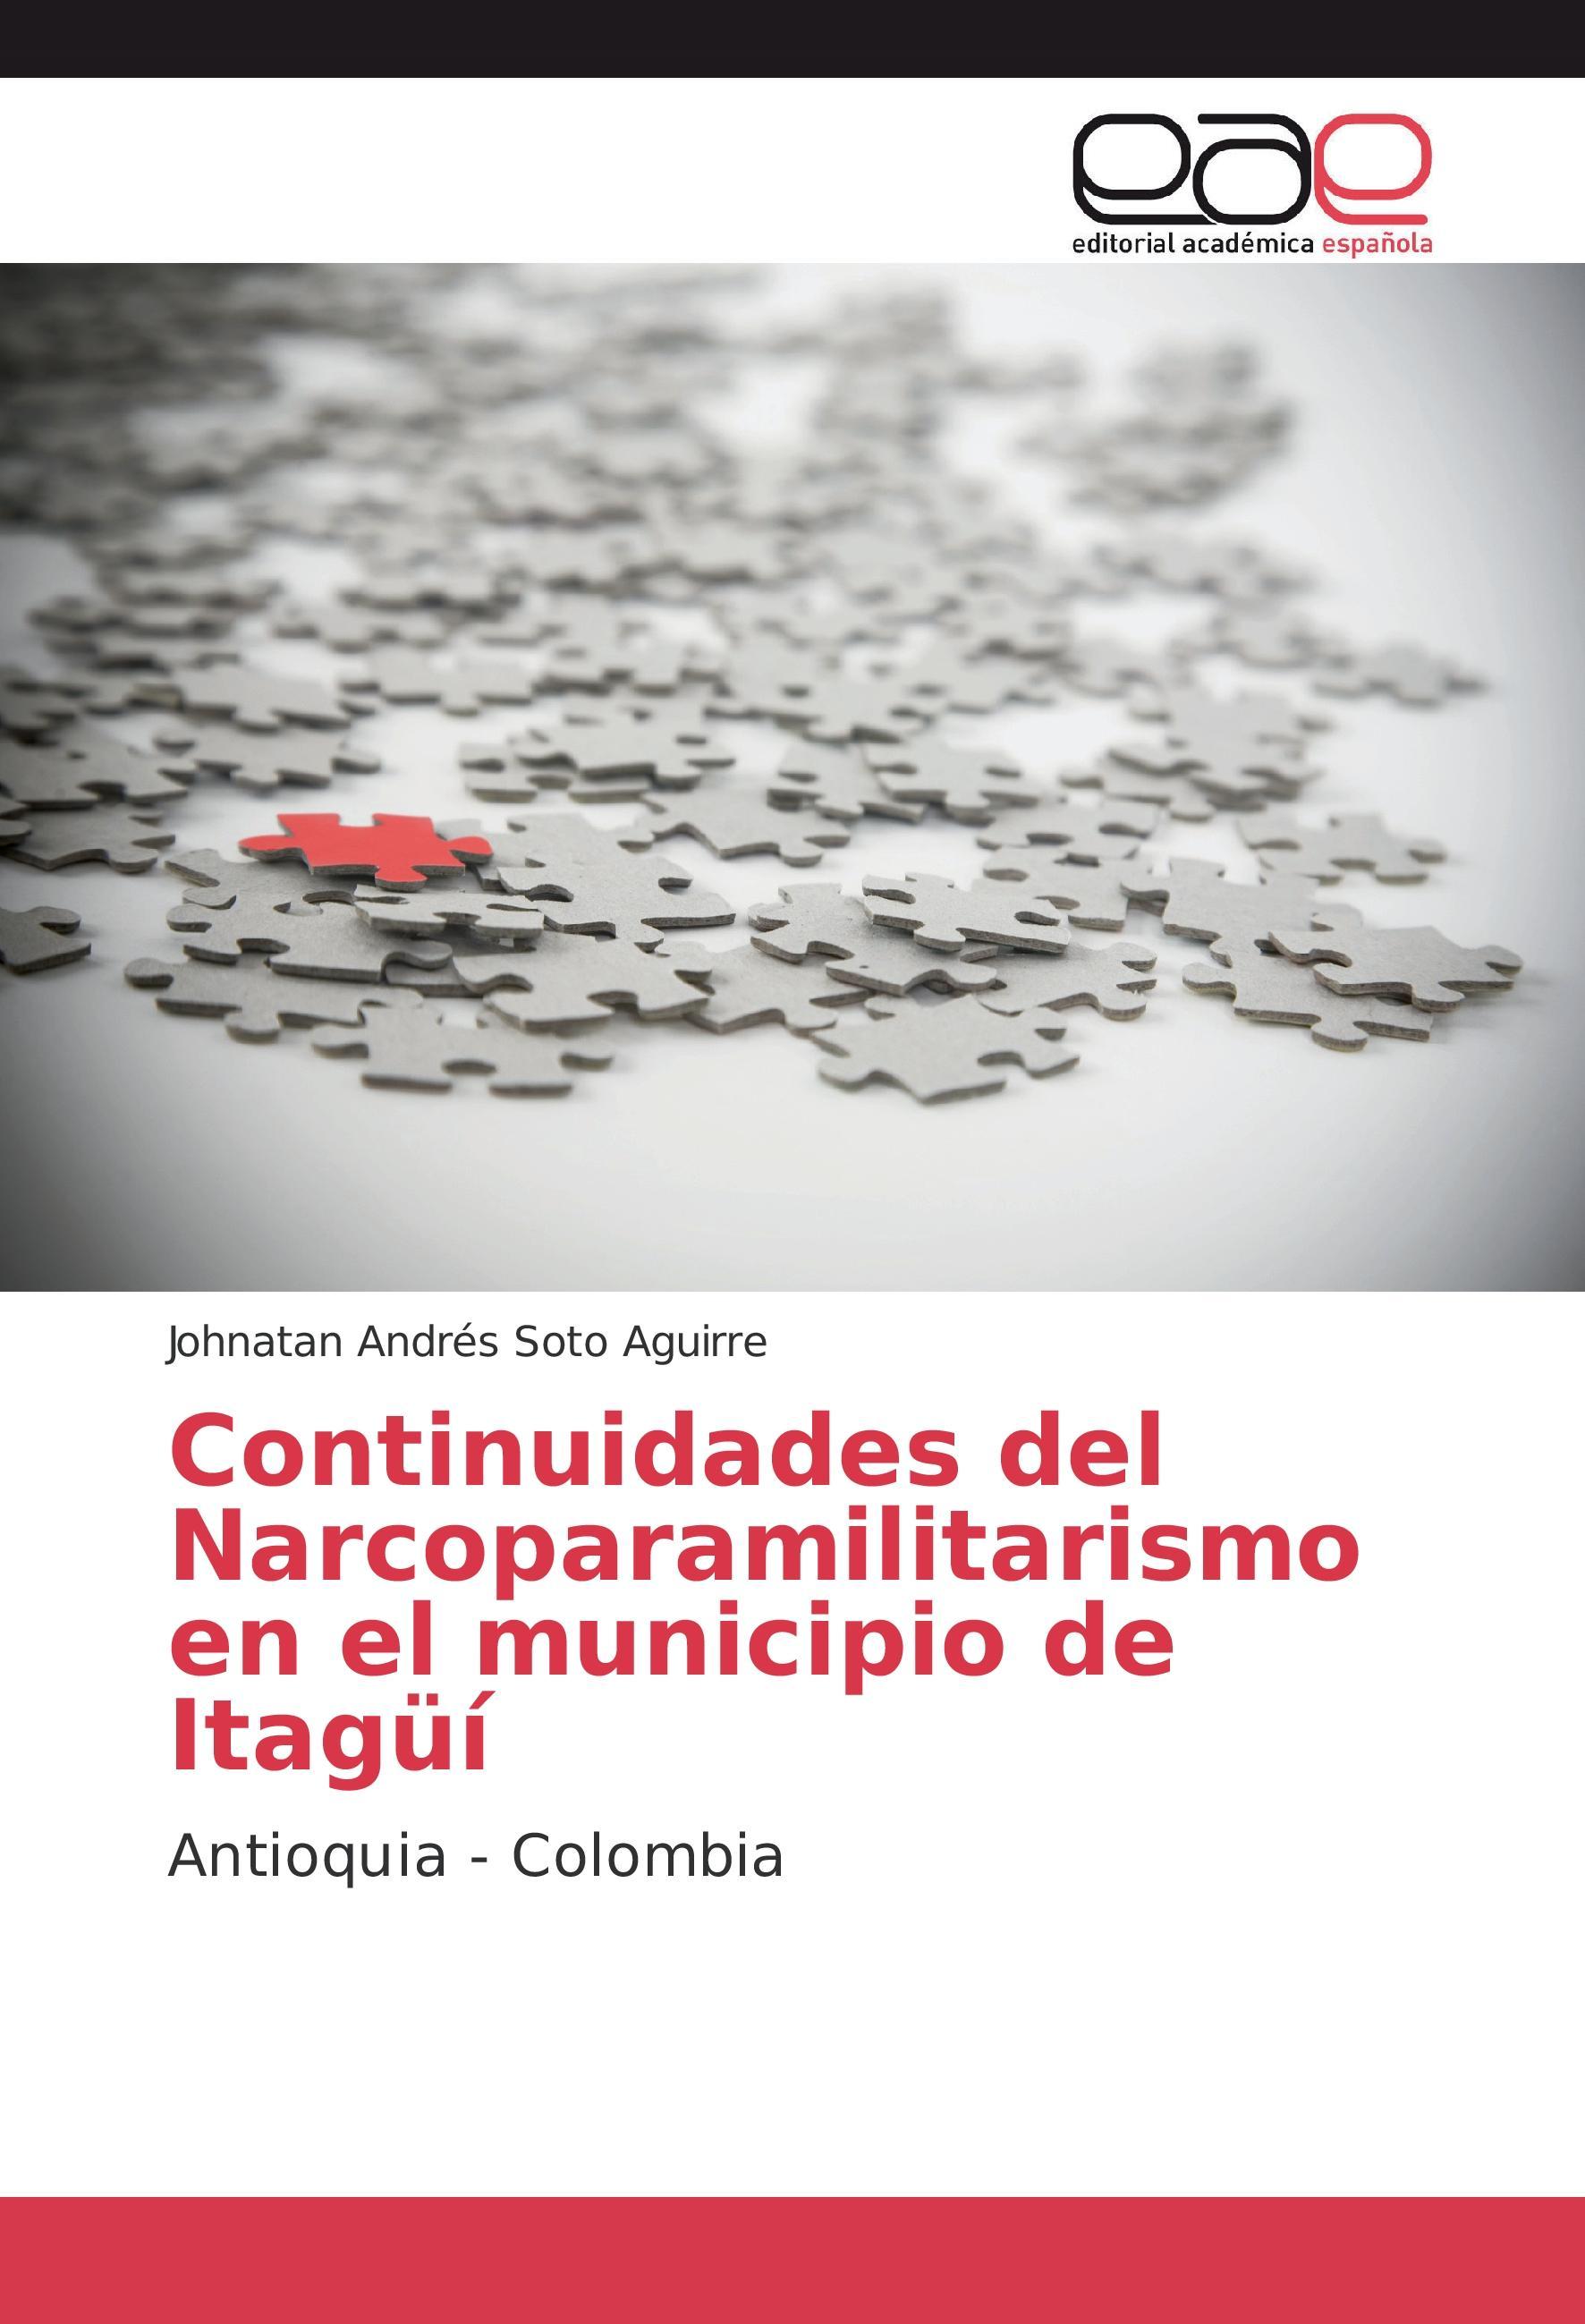 Continuidades del Narcoparamilitarismo en el municipio de Itagueí - Soto Aguirre, Johnatan Andrés